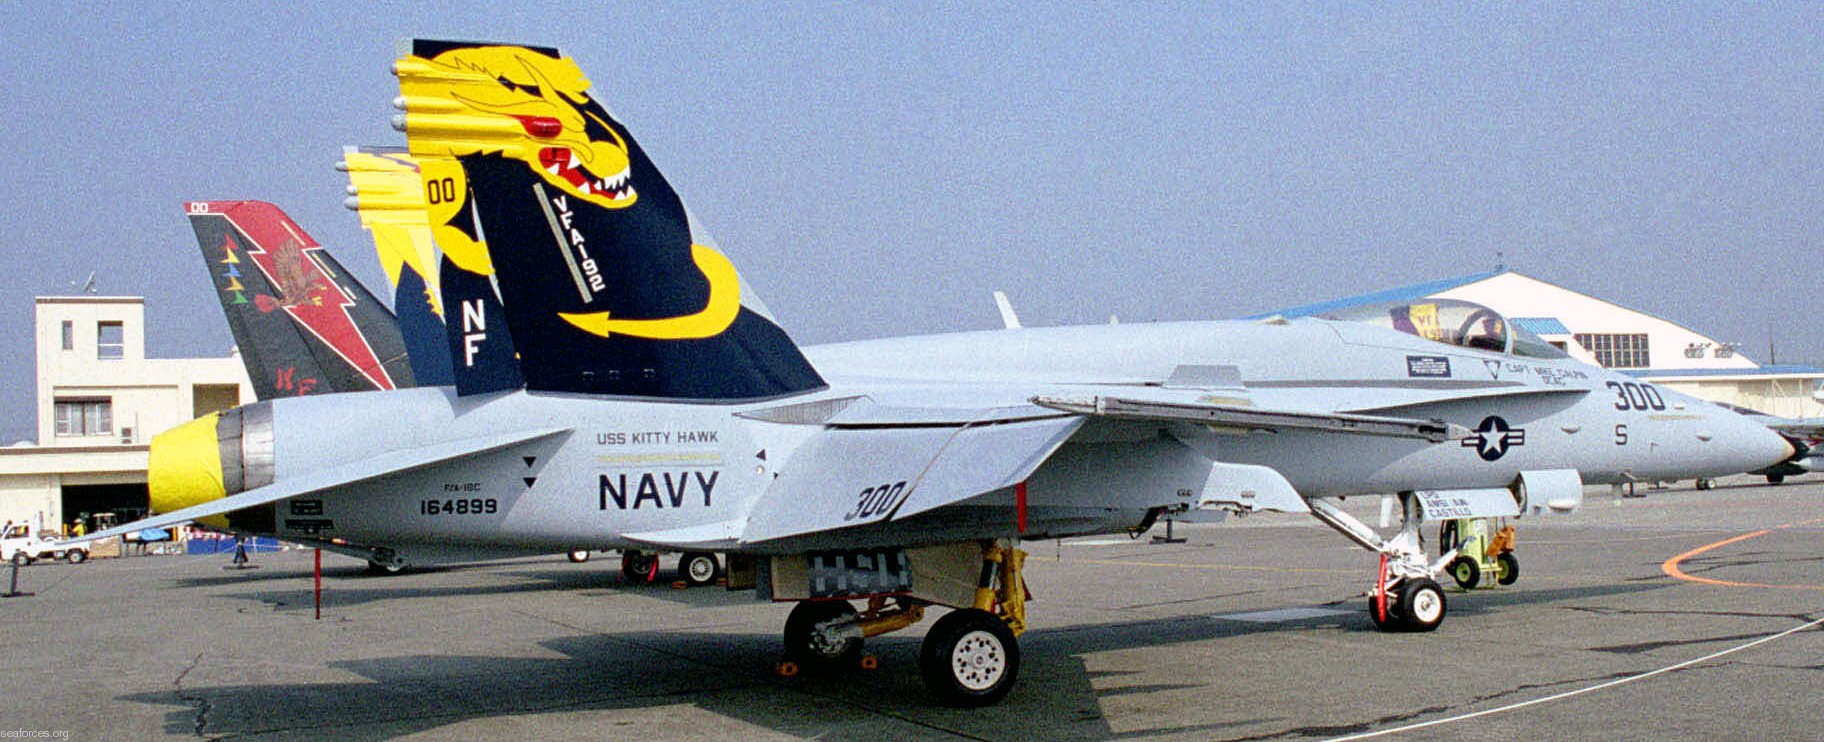 vfa-192 golden dragons strike fighter squadron navy f/a-18c hornet carrier air wing cvw-5 uss kitty hawk cv-63 115